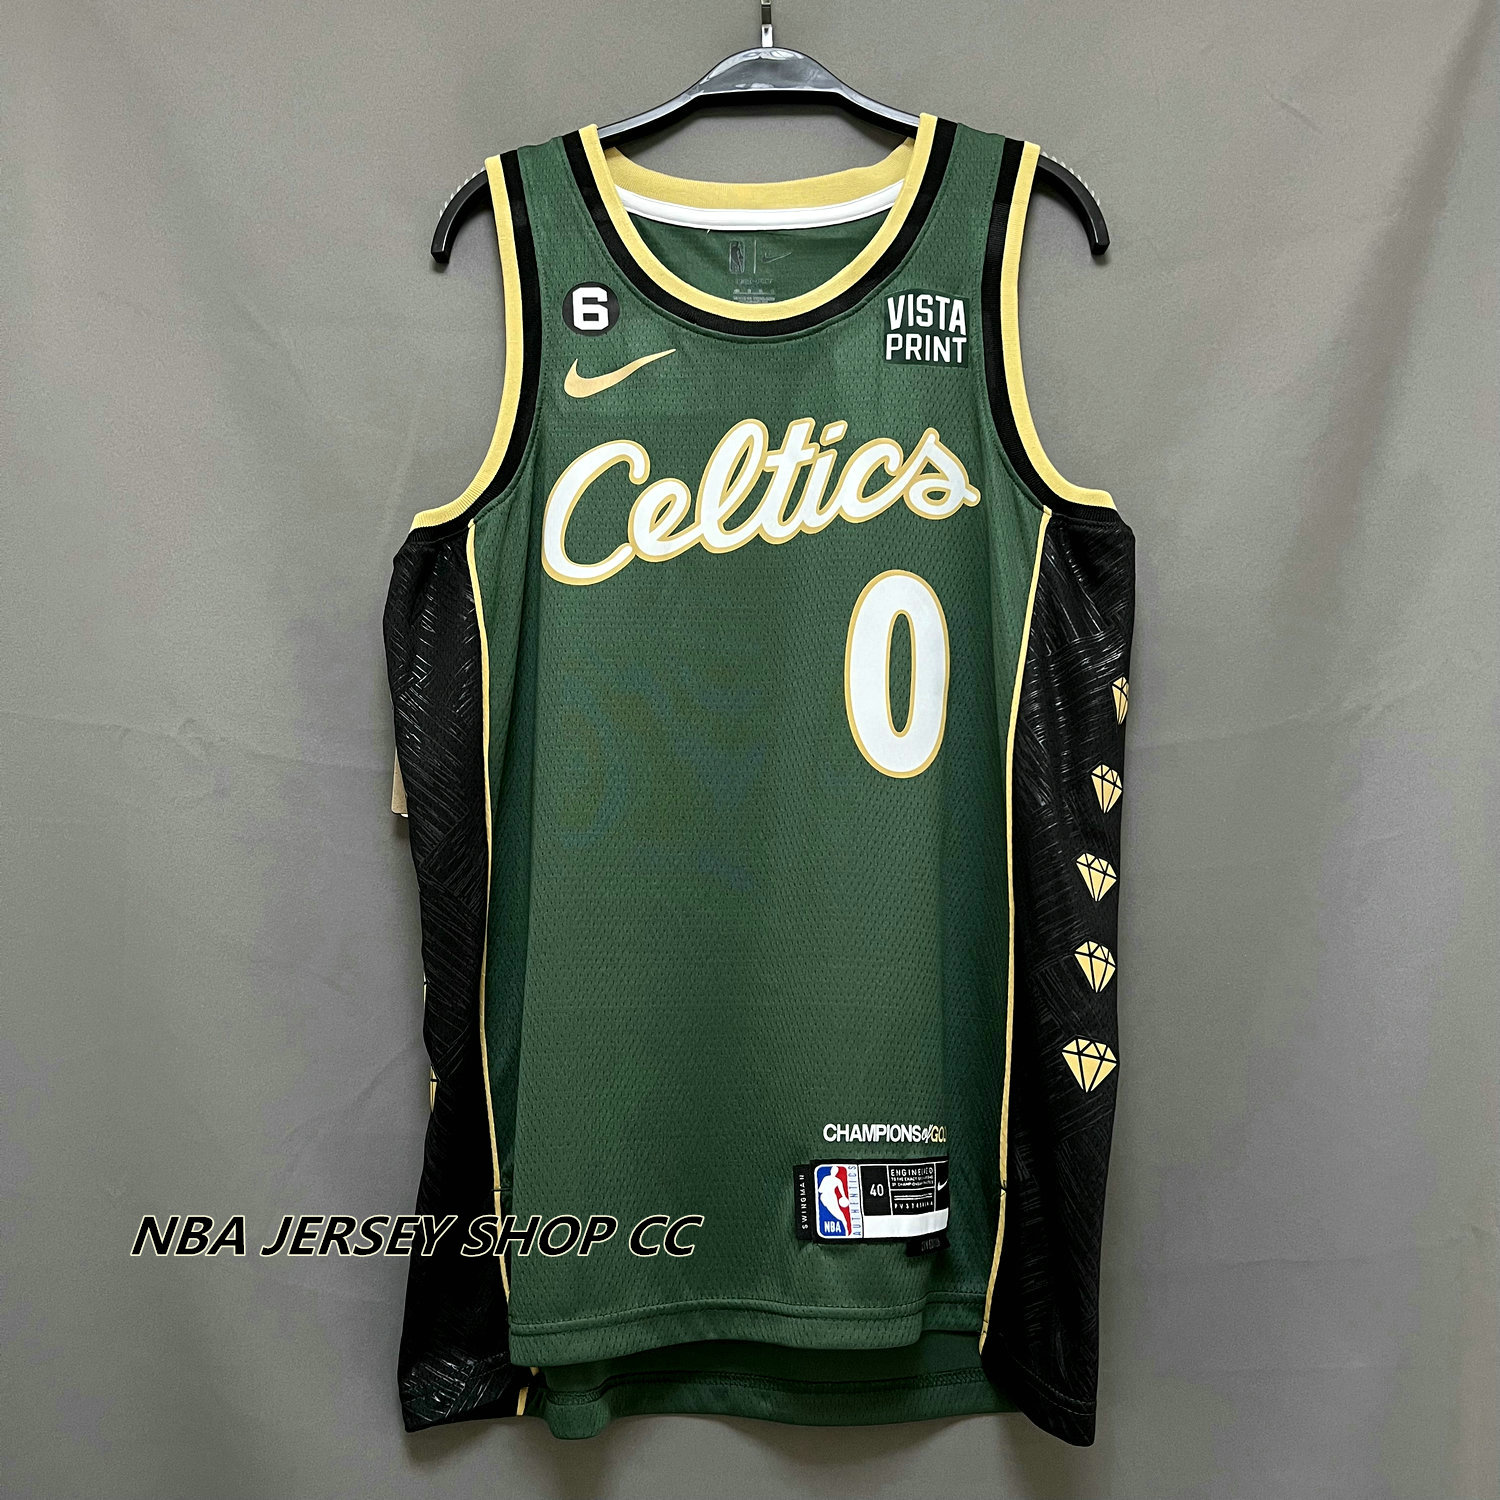 NBA Boston Celtics Marcus Smart #36 Men's Replica Jersey, Medium, Green  (3HE) : : Fashion